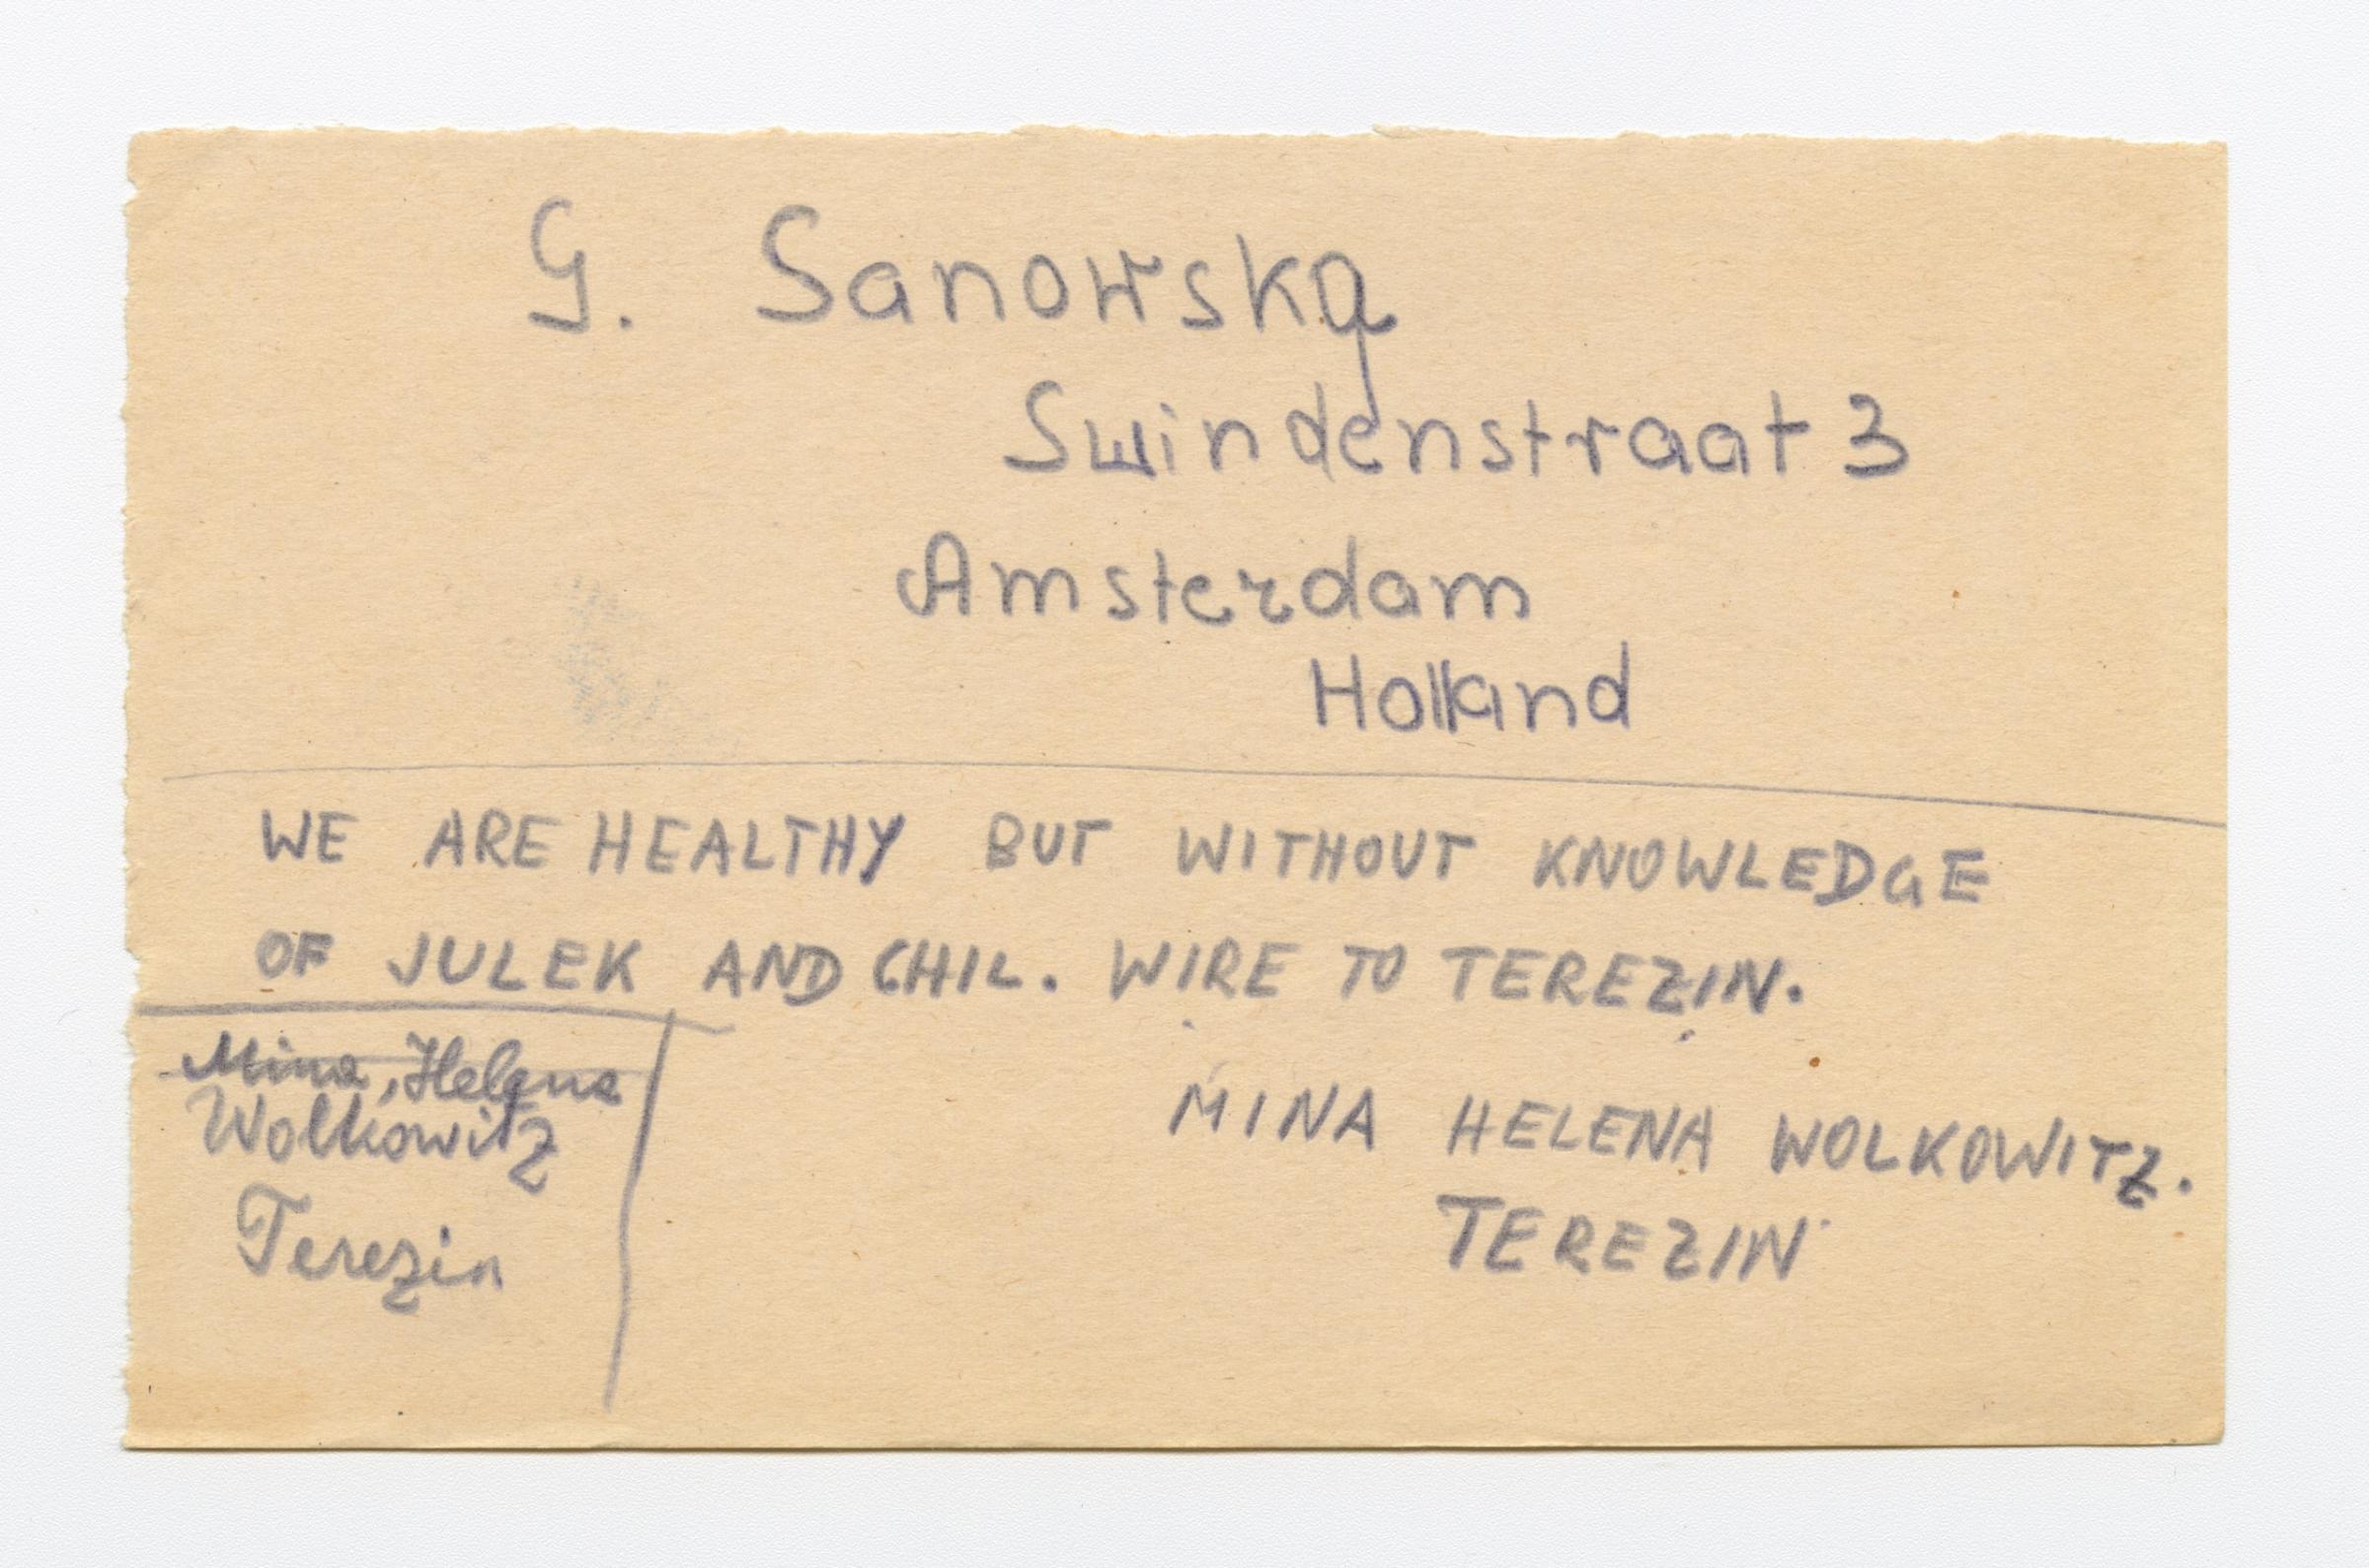 Draft telegram sent by survivors seeking information and assistance.